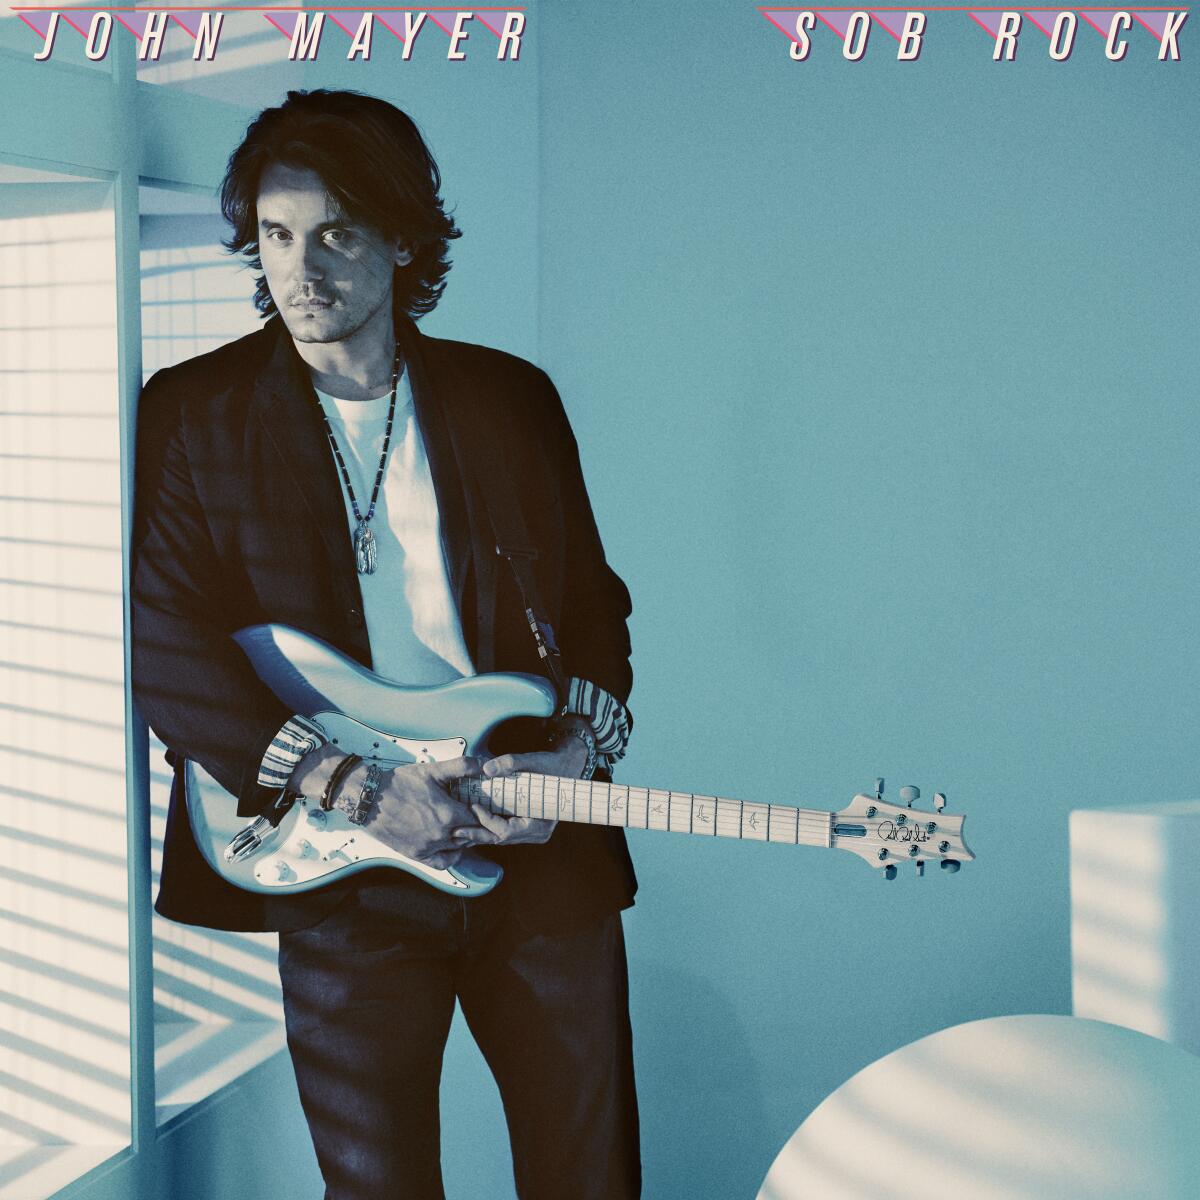 Cover of John Mayer's 2021 album "Sob Rock"